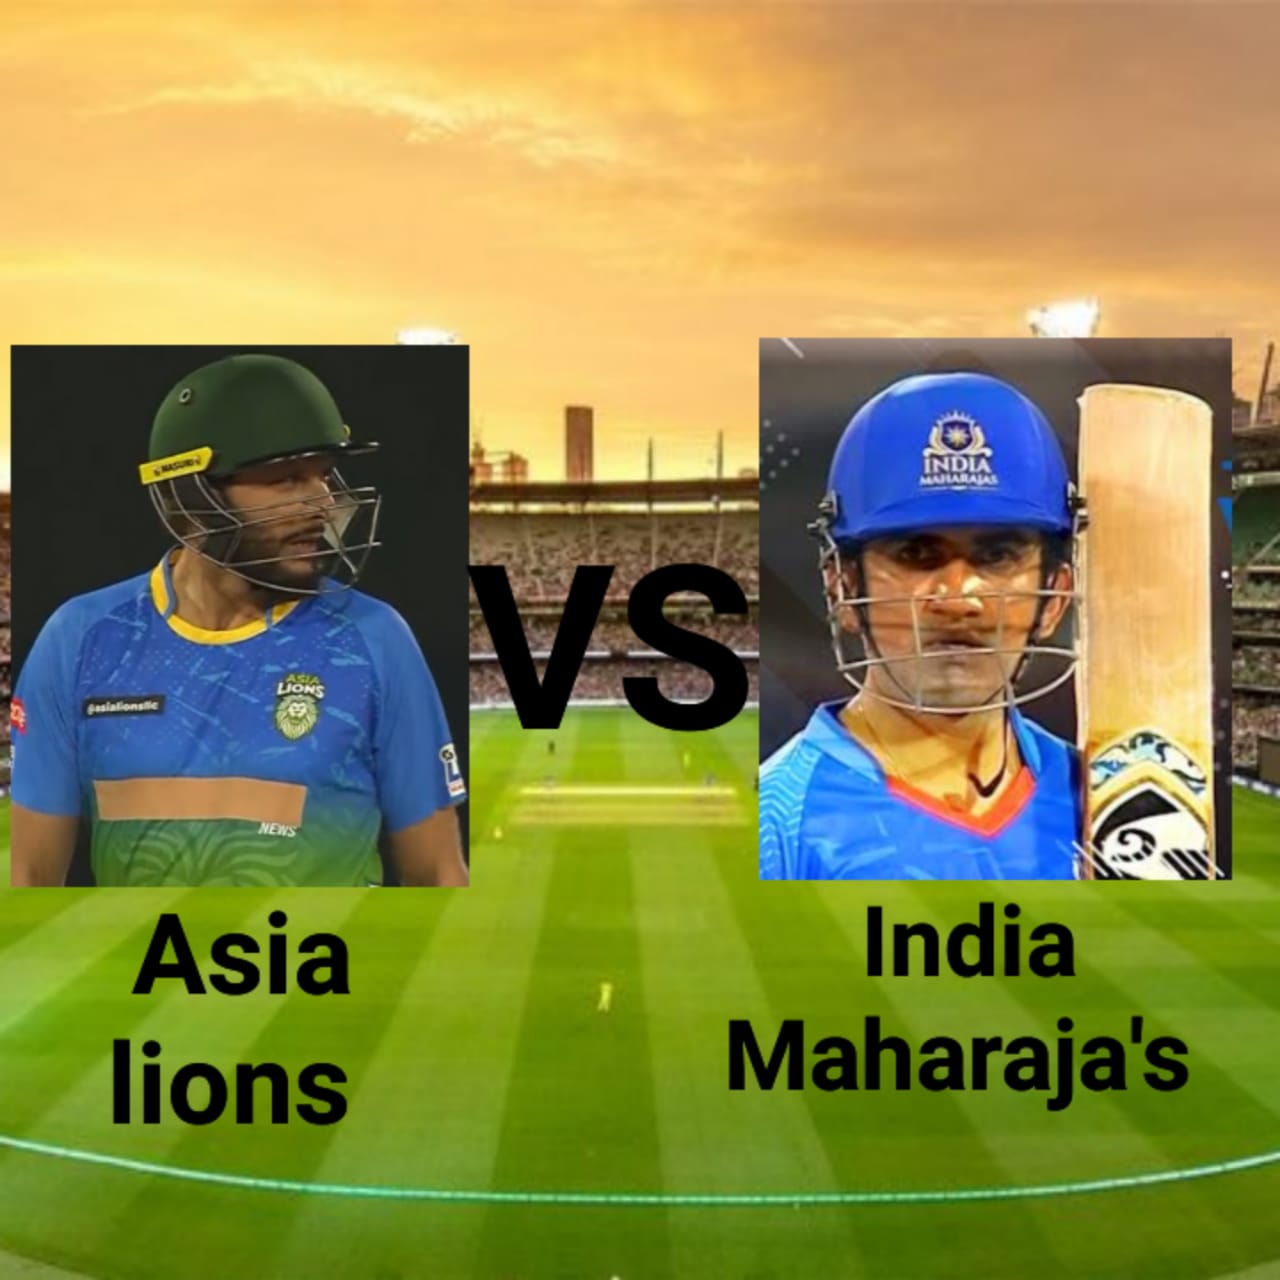 India maharajas vs Asia lions